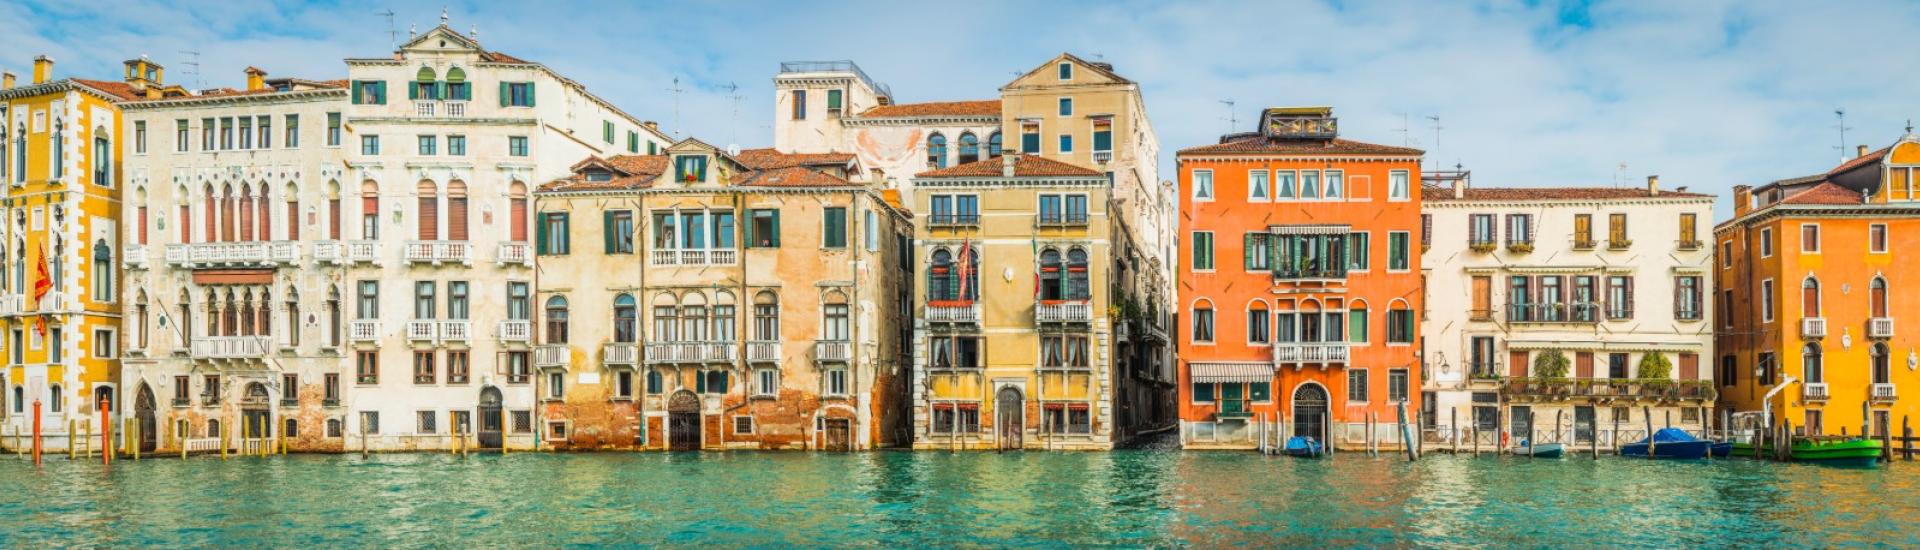 Photo of Venice villas along the Grand Canal.